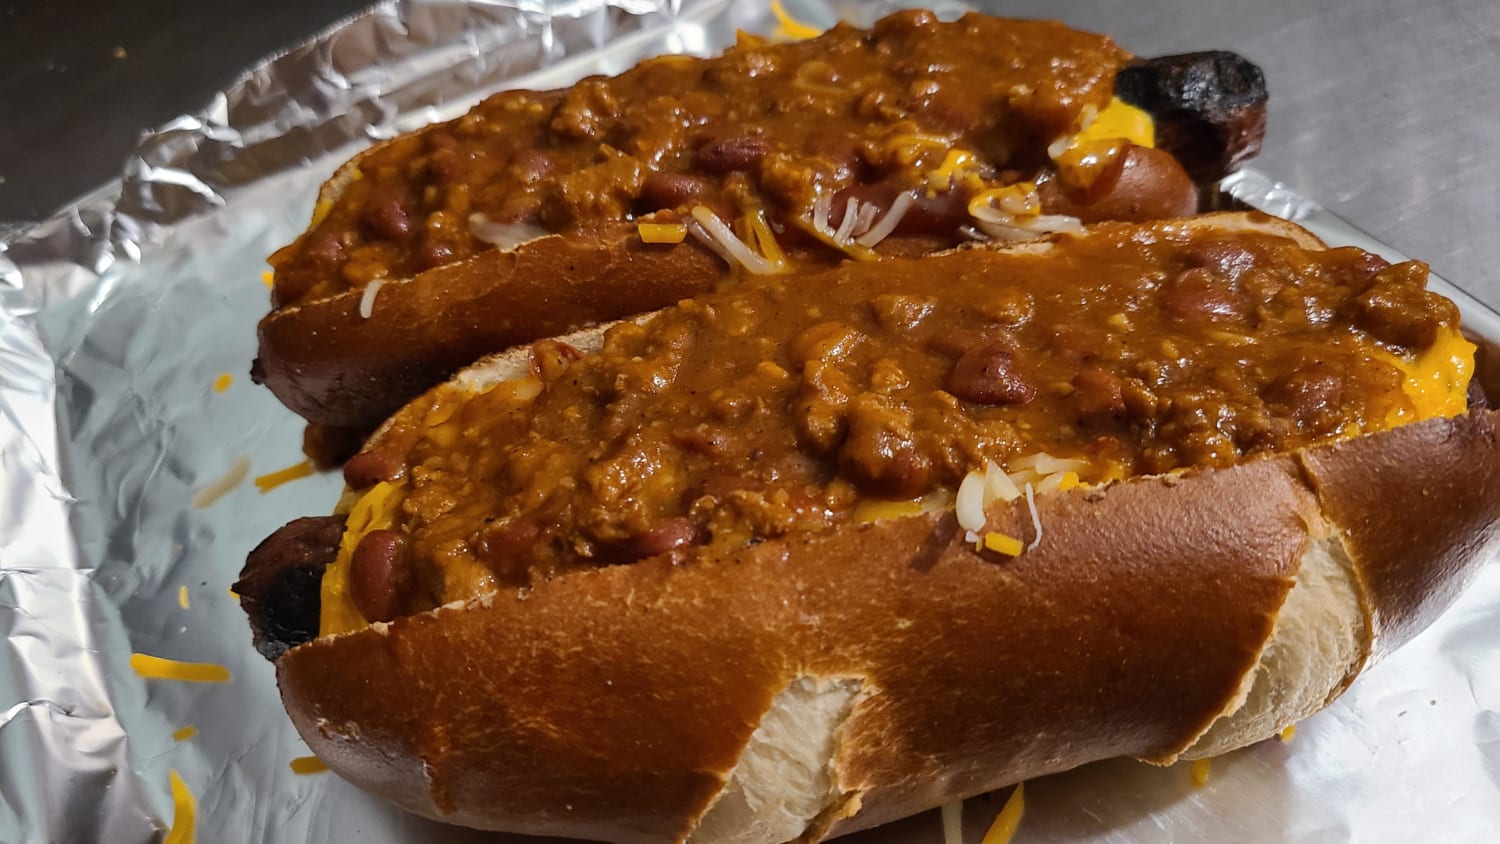 [Homemade] Baked pretzel bun chilli cheese dogs.